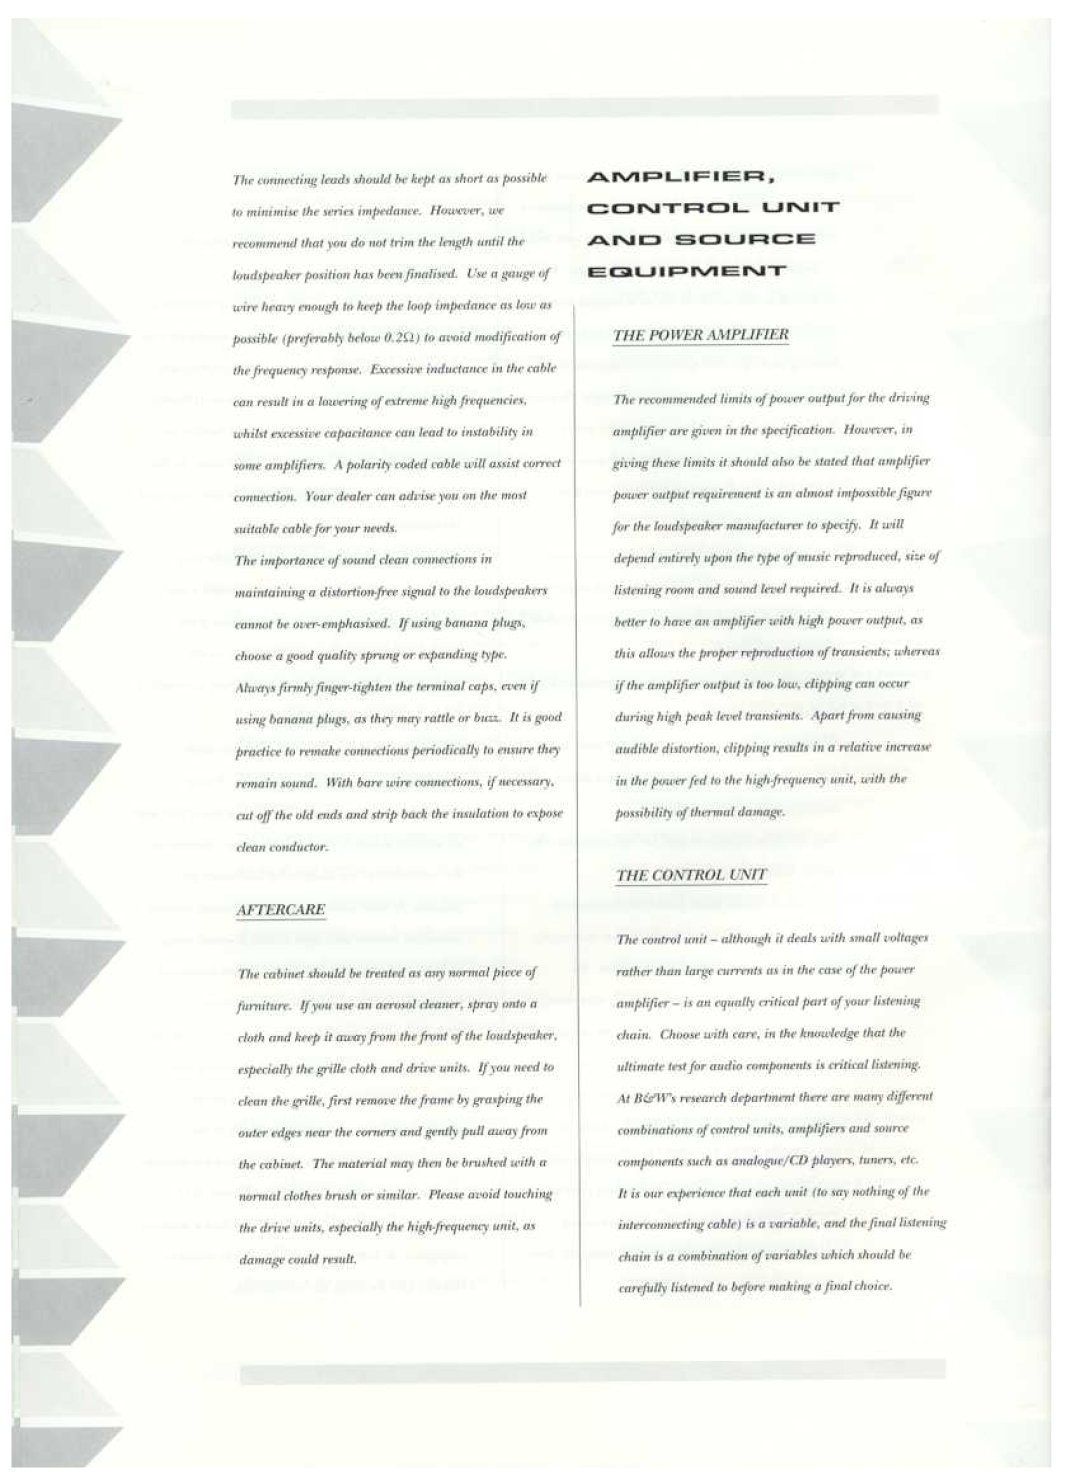 Bowers & Wilkins DM600i manual 